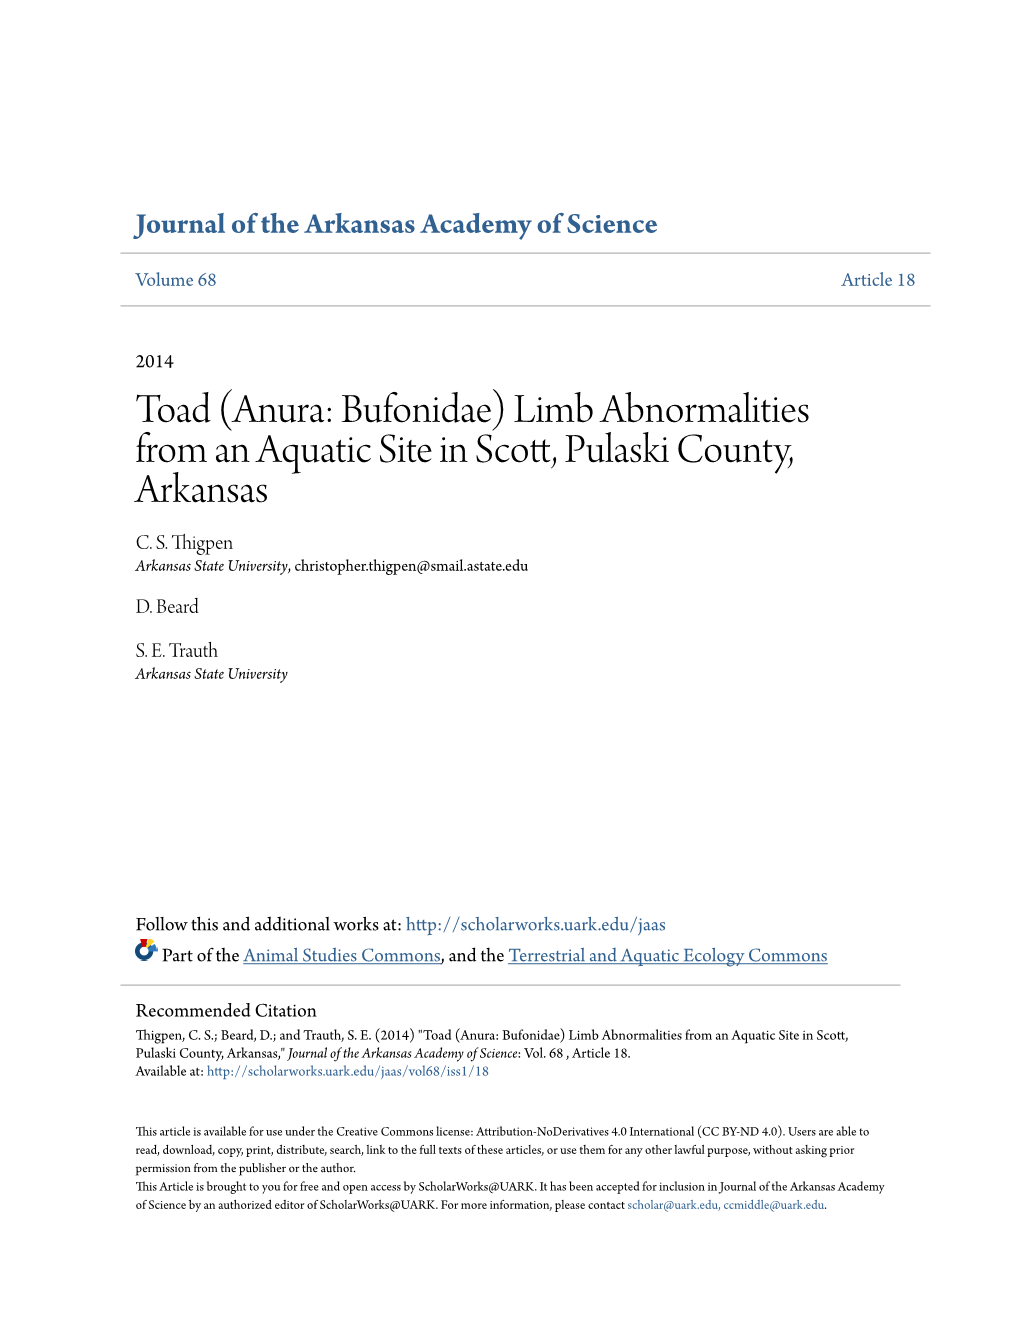 Toad (Anura: Bufonidae) Limb Abnormalities from an Aquatic Site in Scott, Pulaski County, Arkansas C